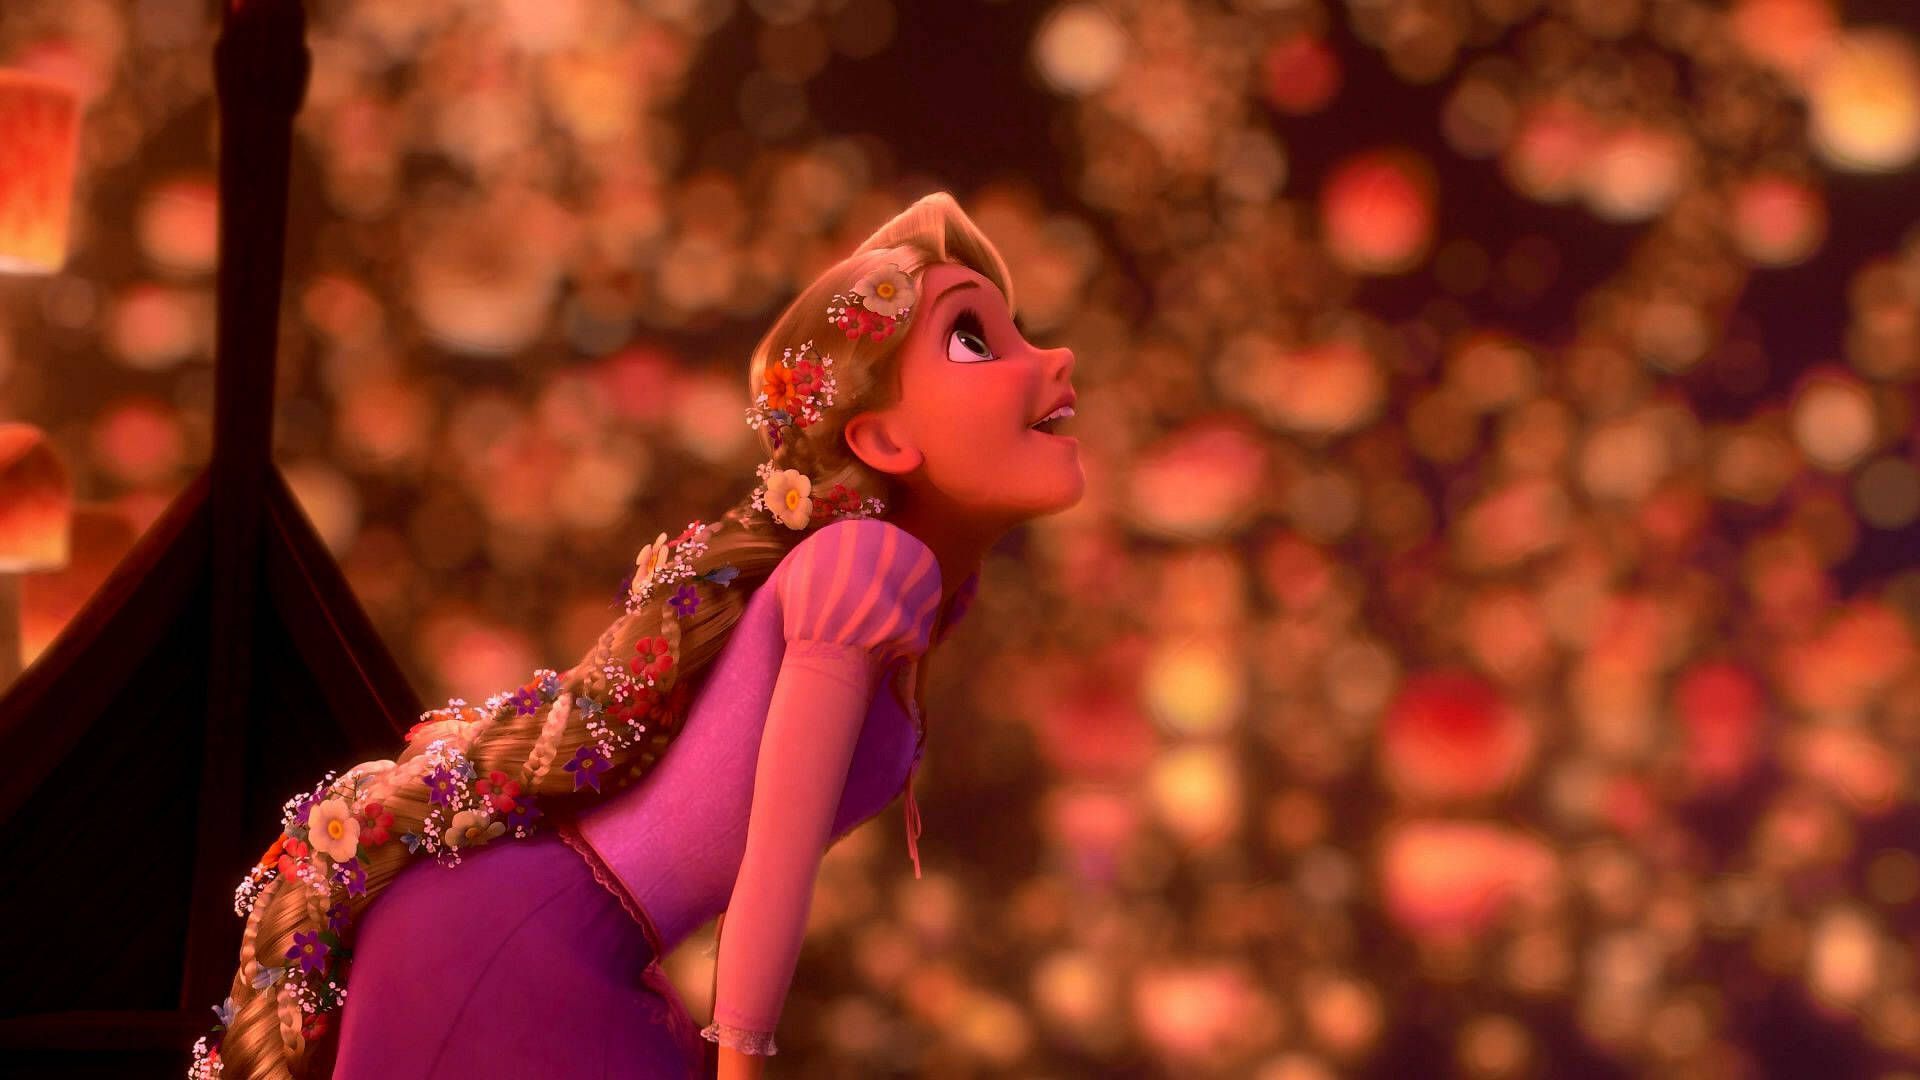 Rapunzel in the lantern scene from Tangled - Rapunzel